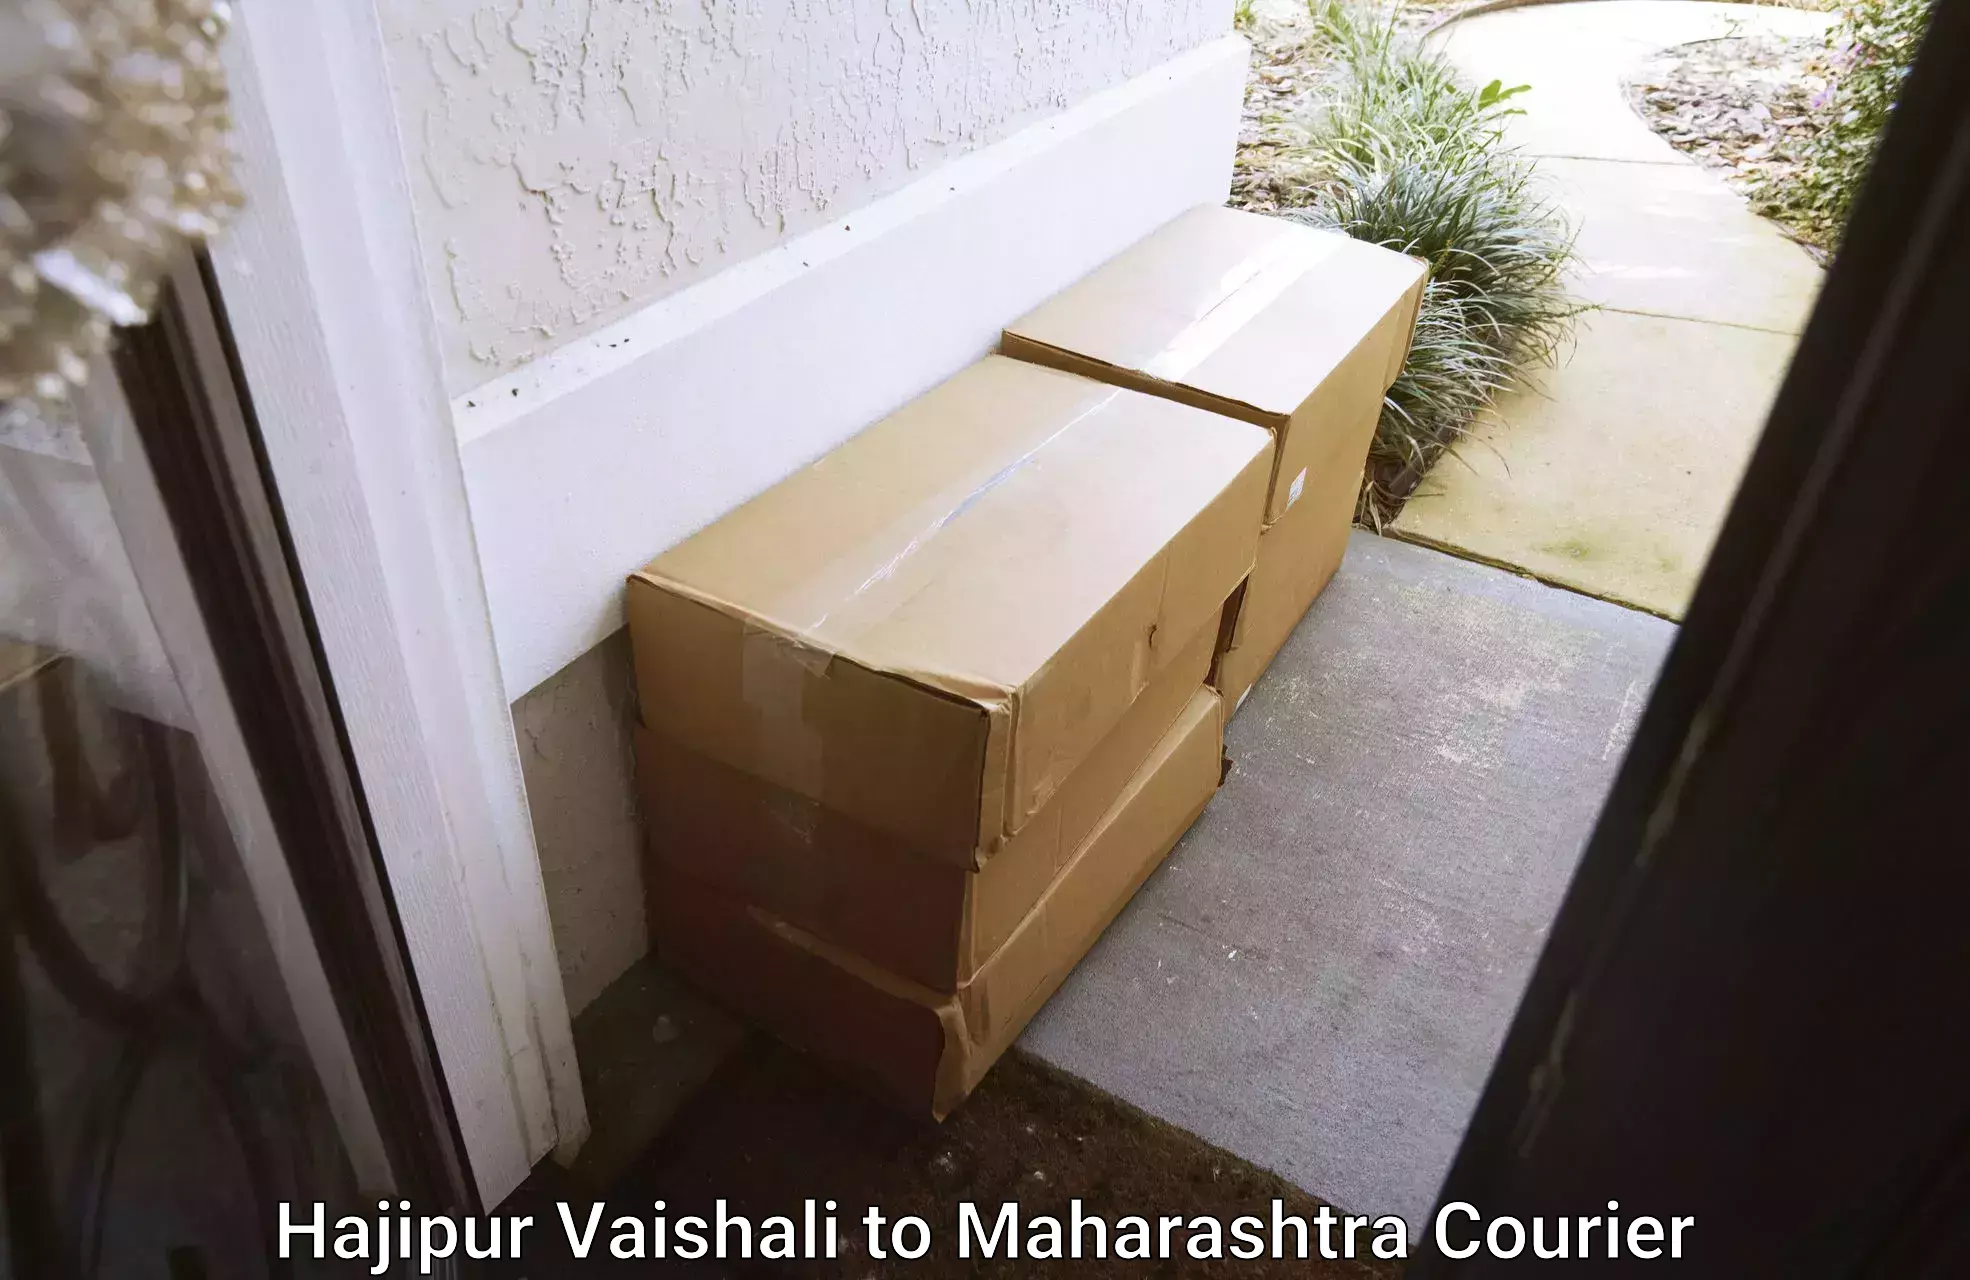 Furniture moving specialists Hajipur Vaishali to Tata Institute of Social Sciences Mumbai